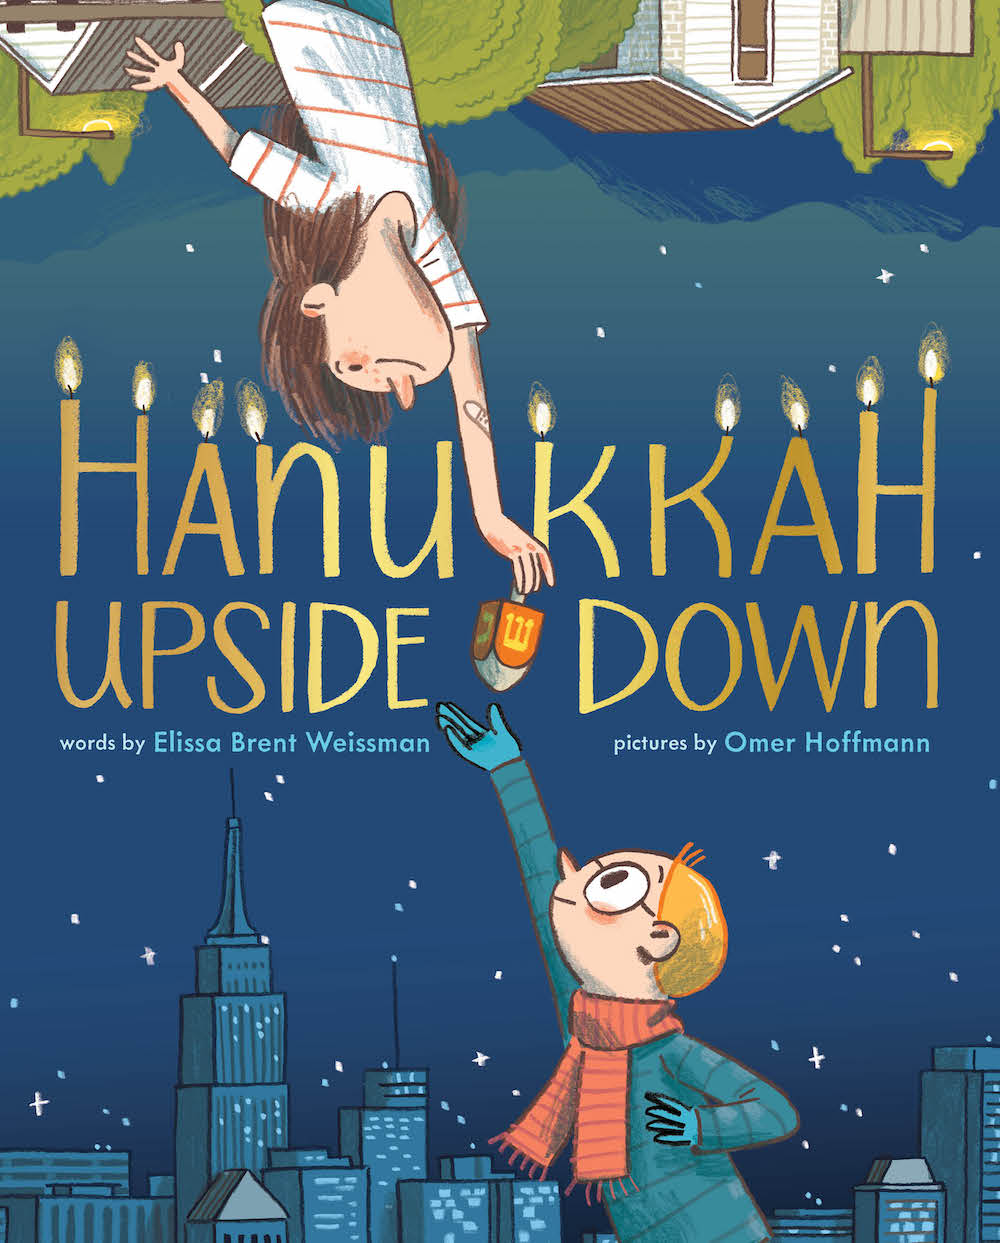 Hanukah upside down book cover.